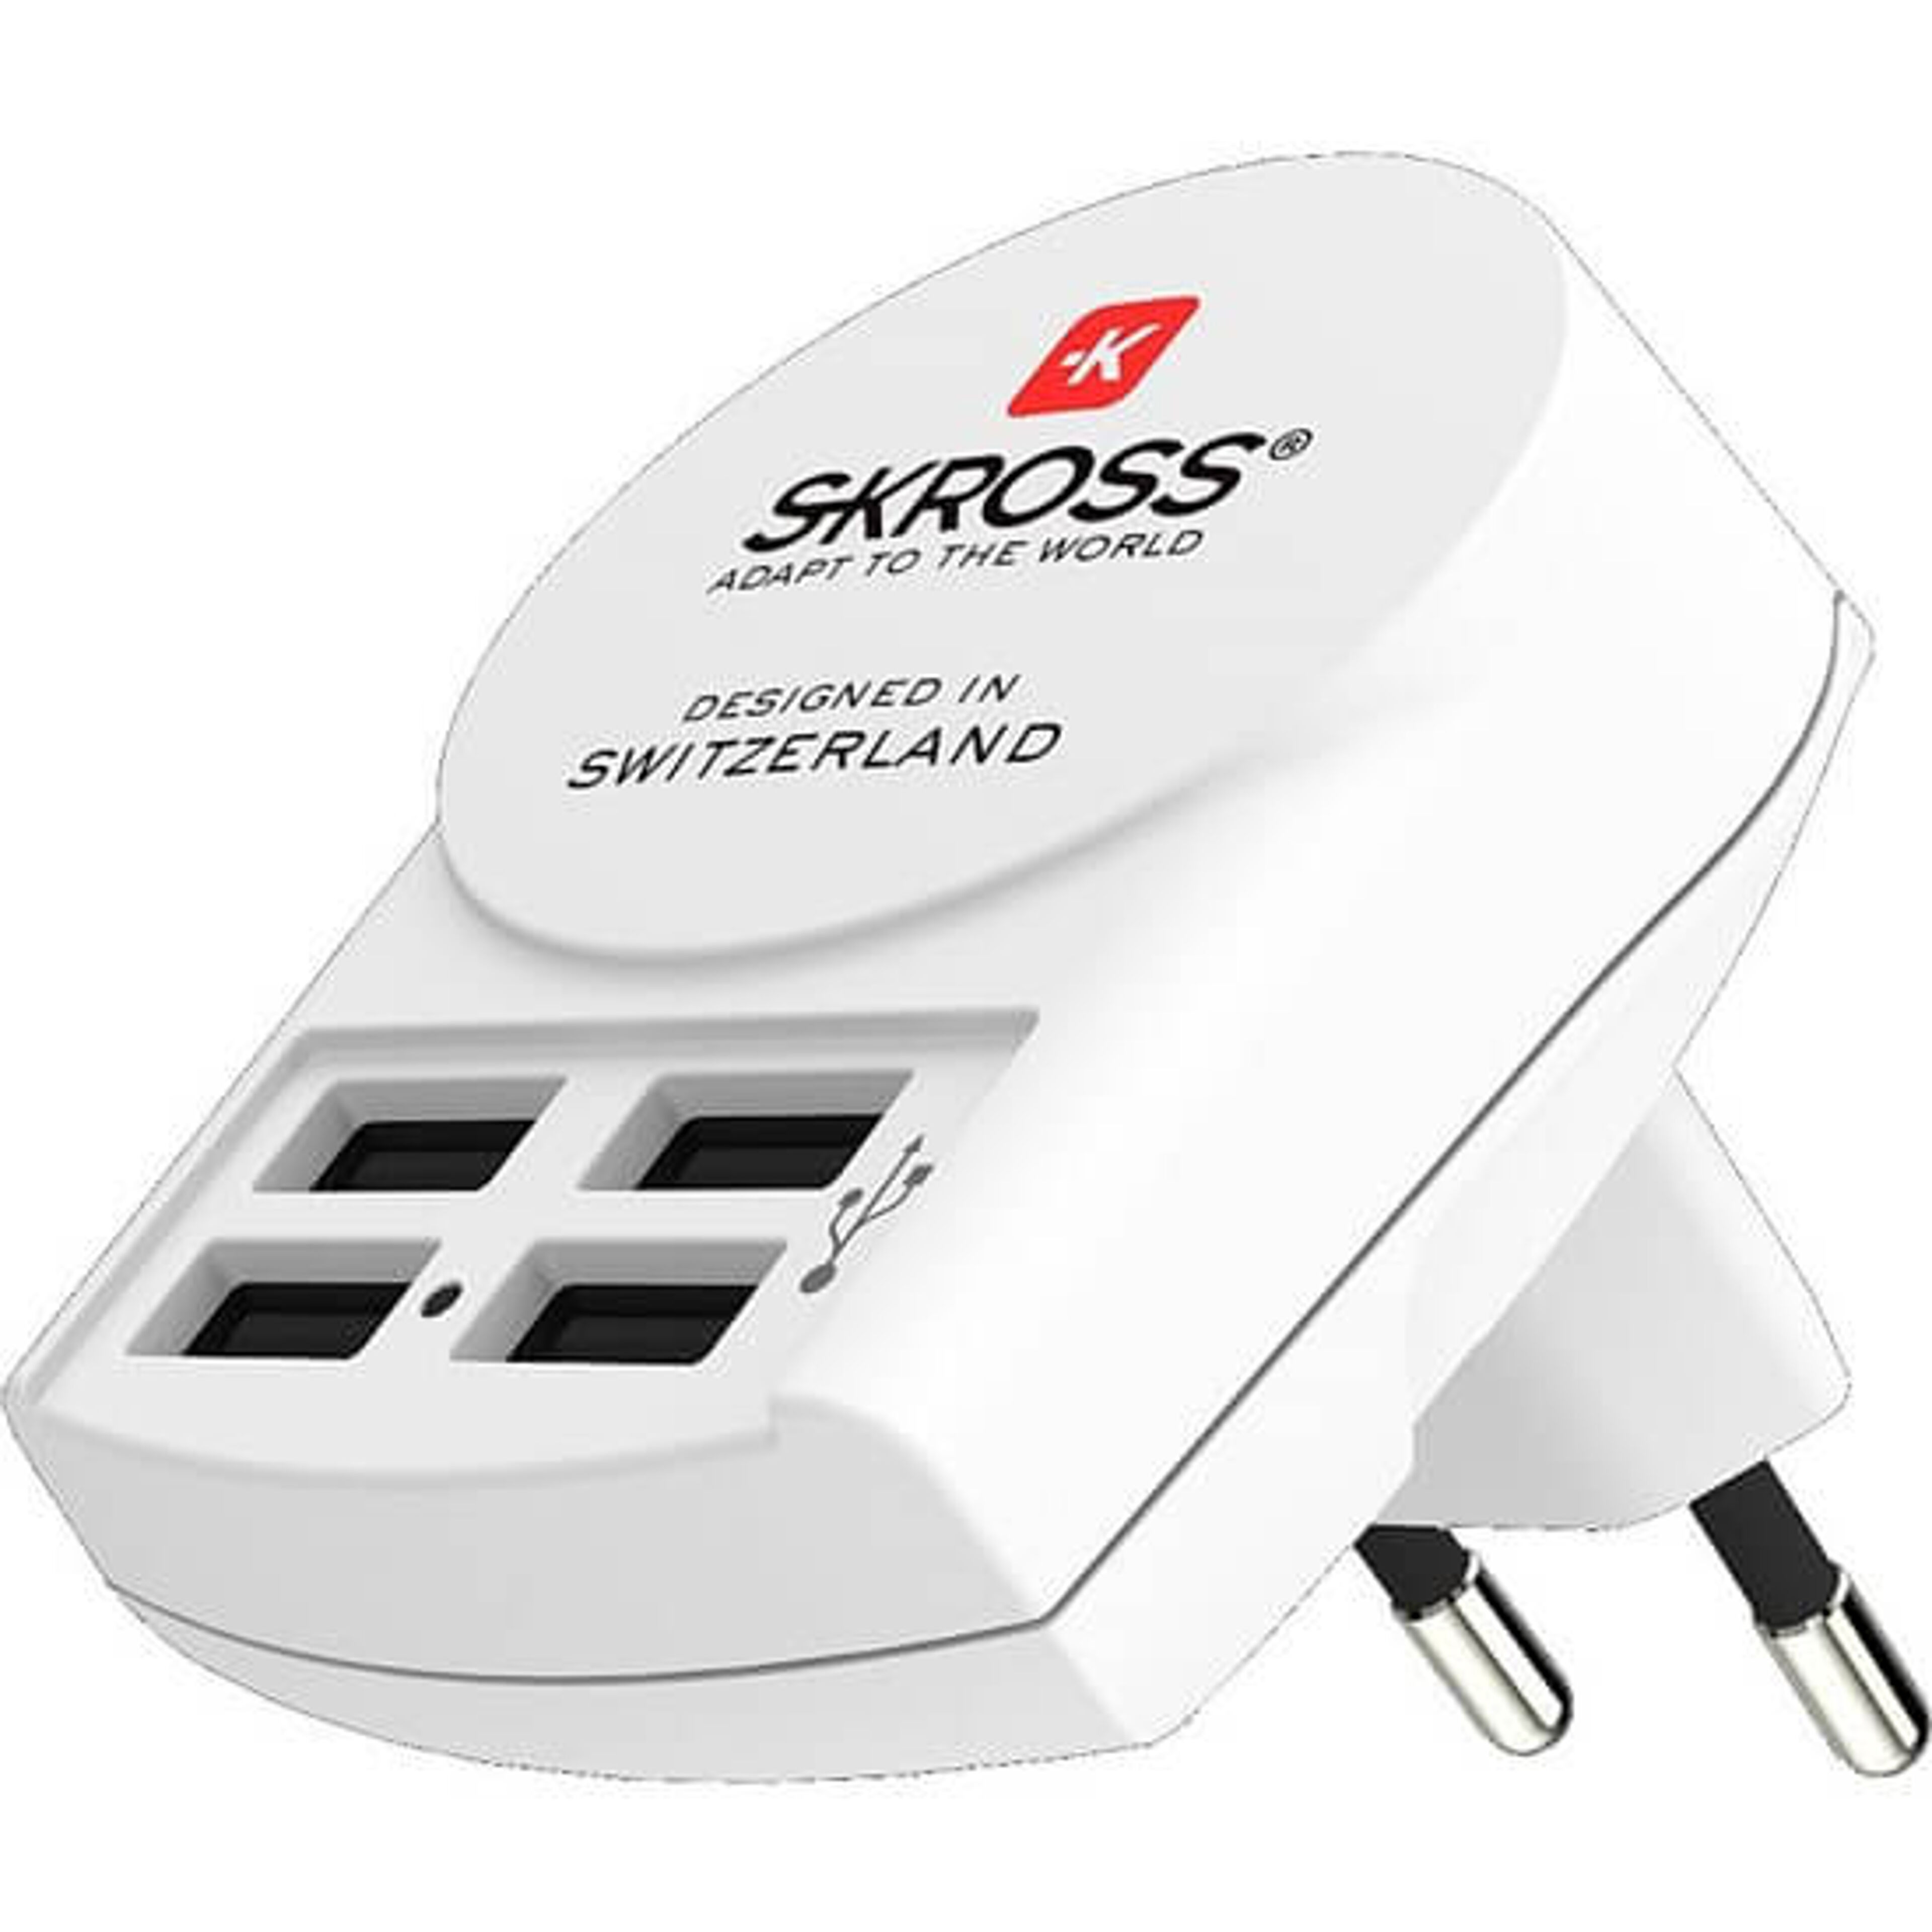 SKROSS Adaptateur de charge Euro USB, 4800mA, 4x sortie USB